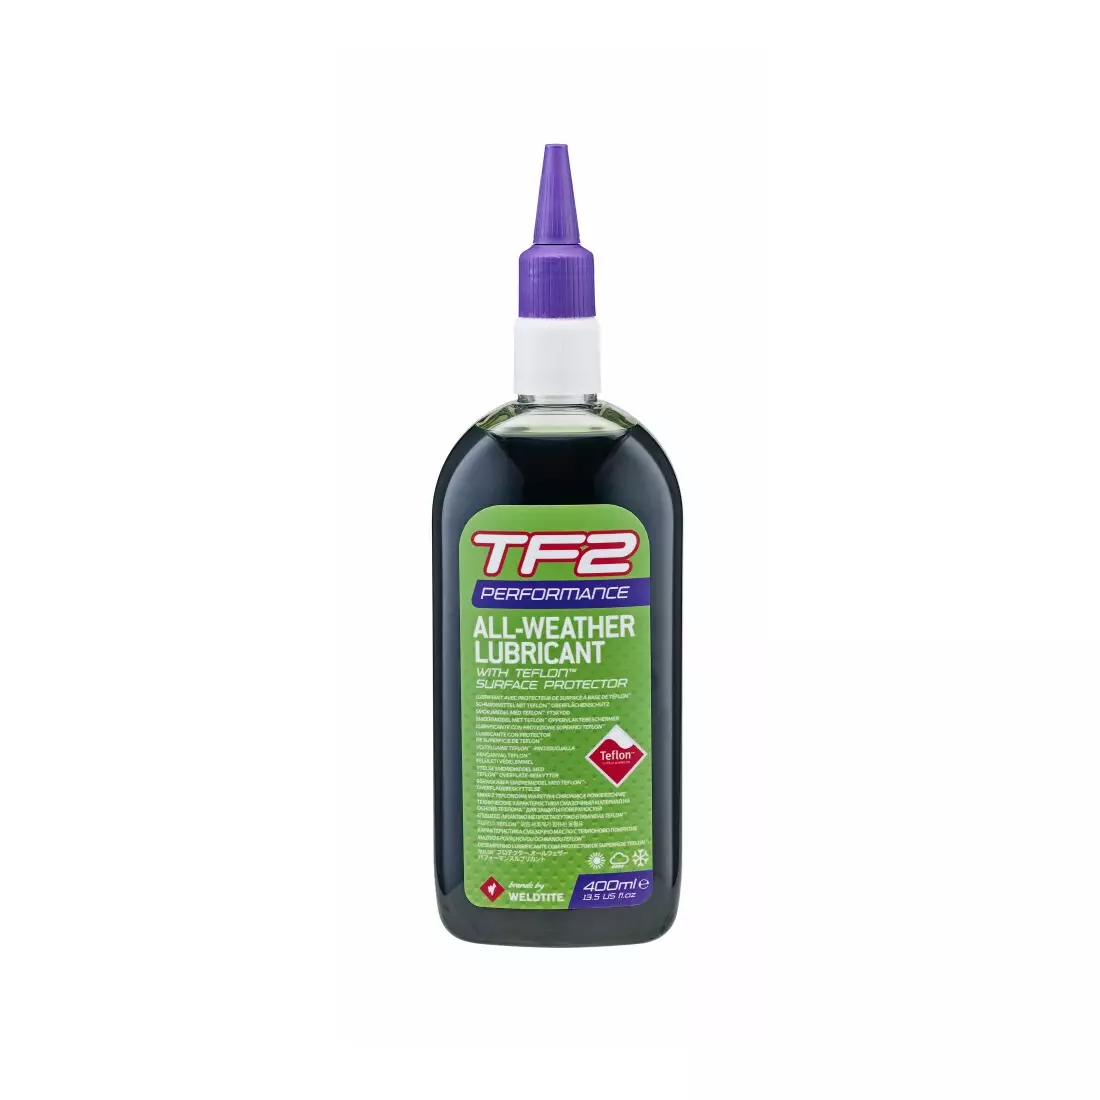 WELDTITE reťazový olej tf2 performance teflon all weather (suché a mokré podmienky) 400ml WLD-03074